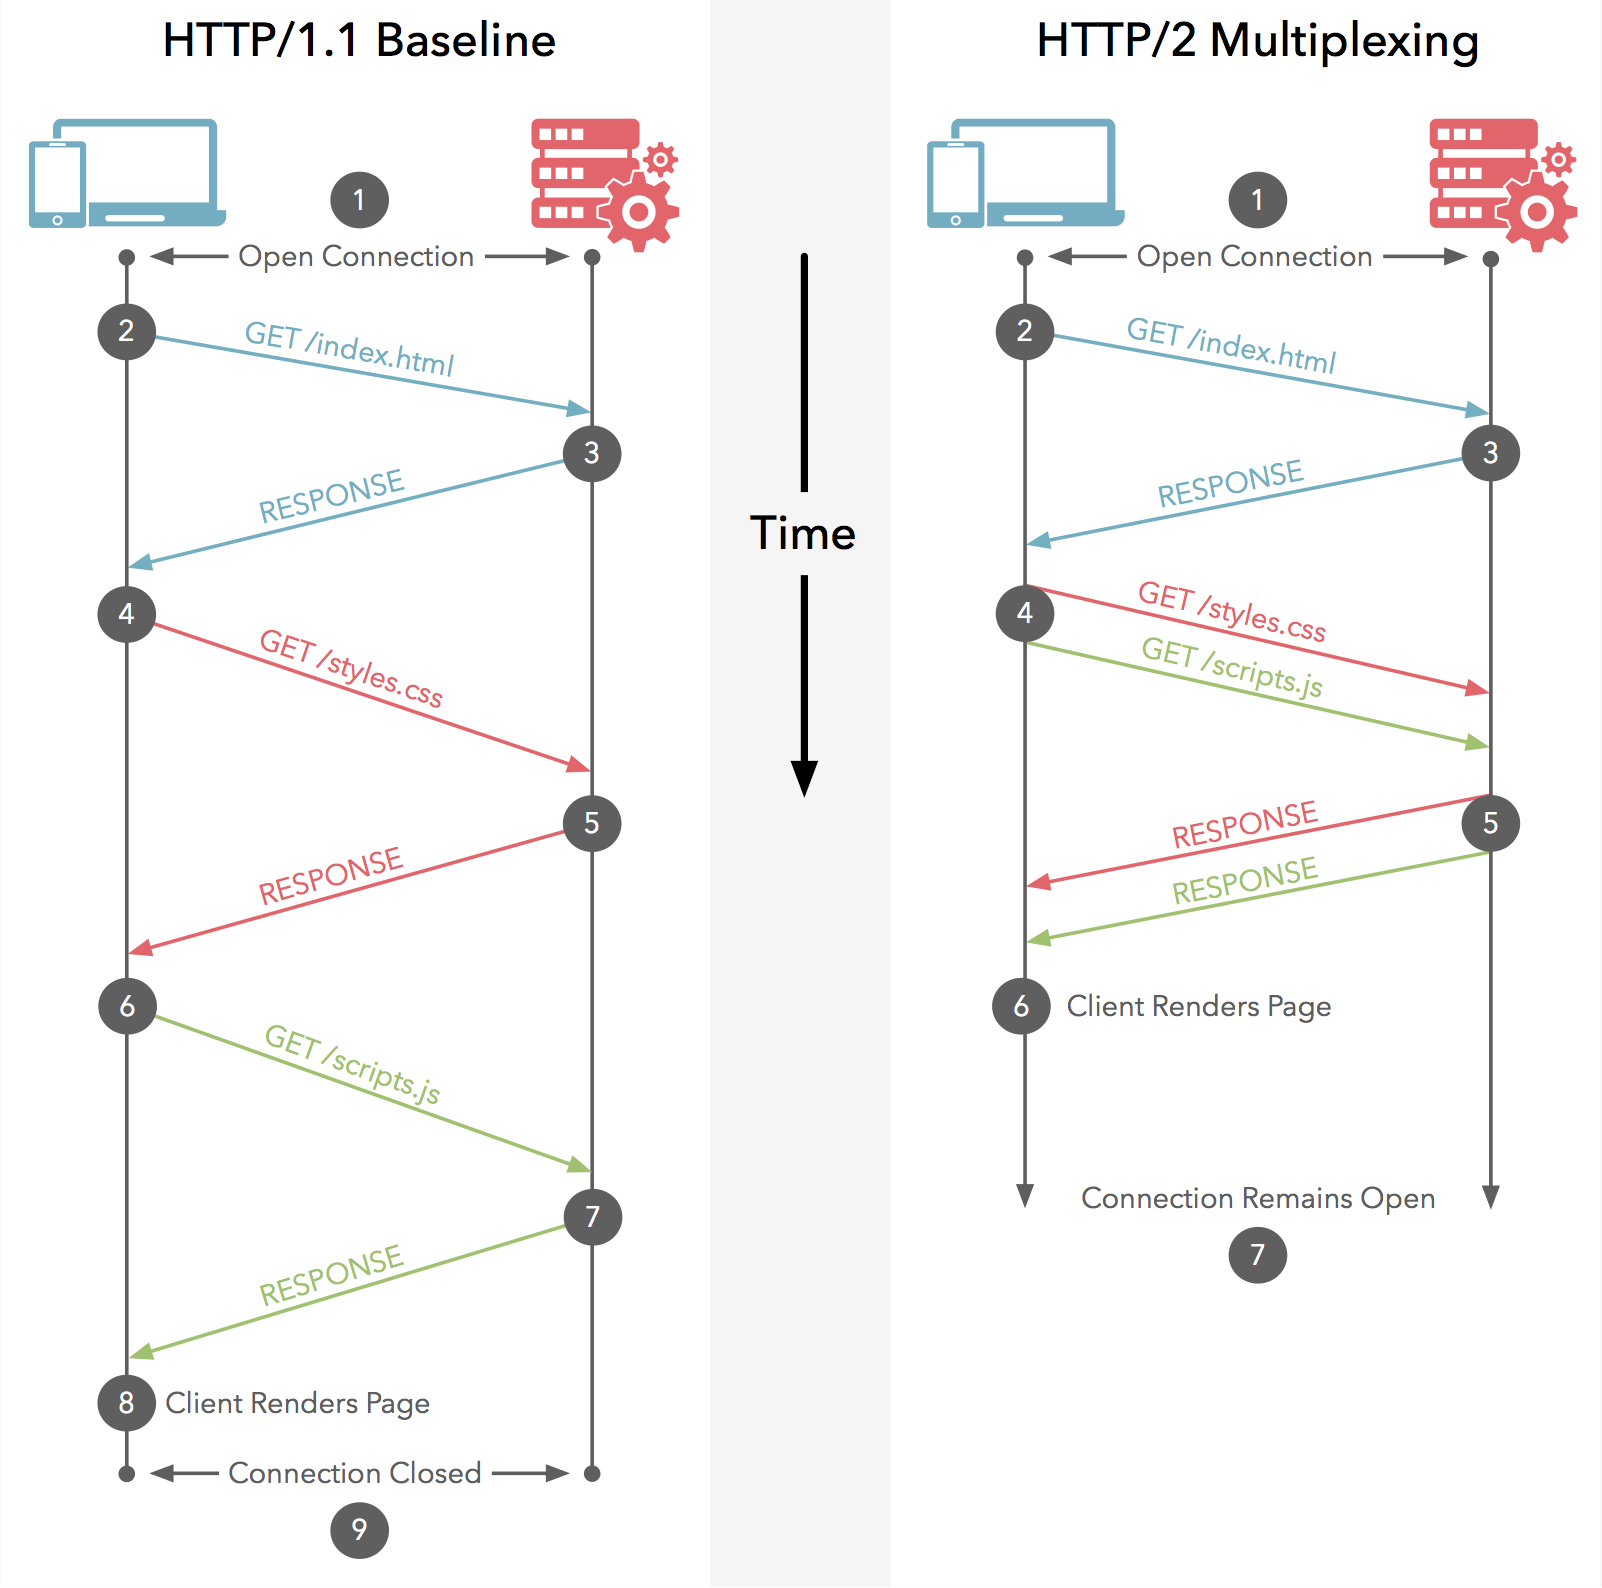 HTTP/2 Multiplexing